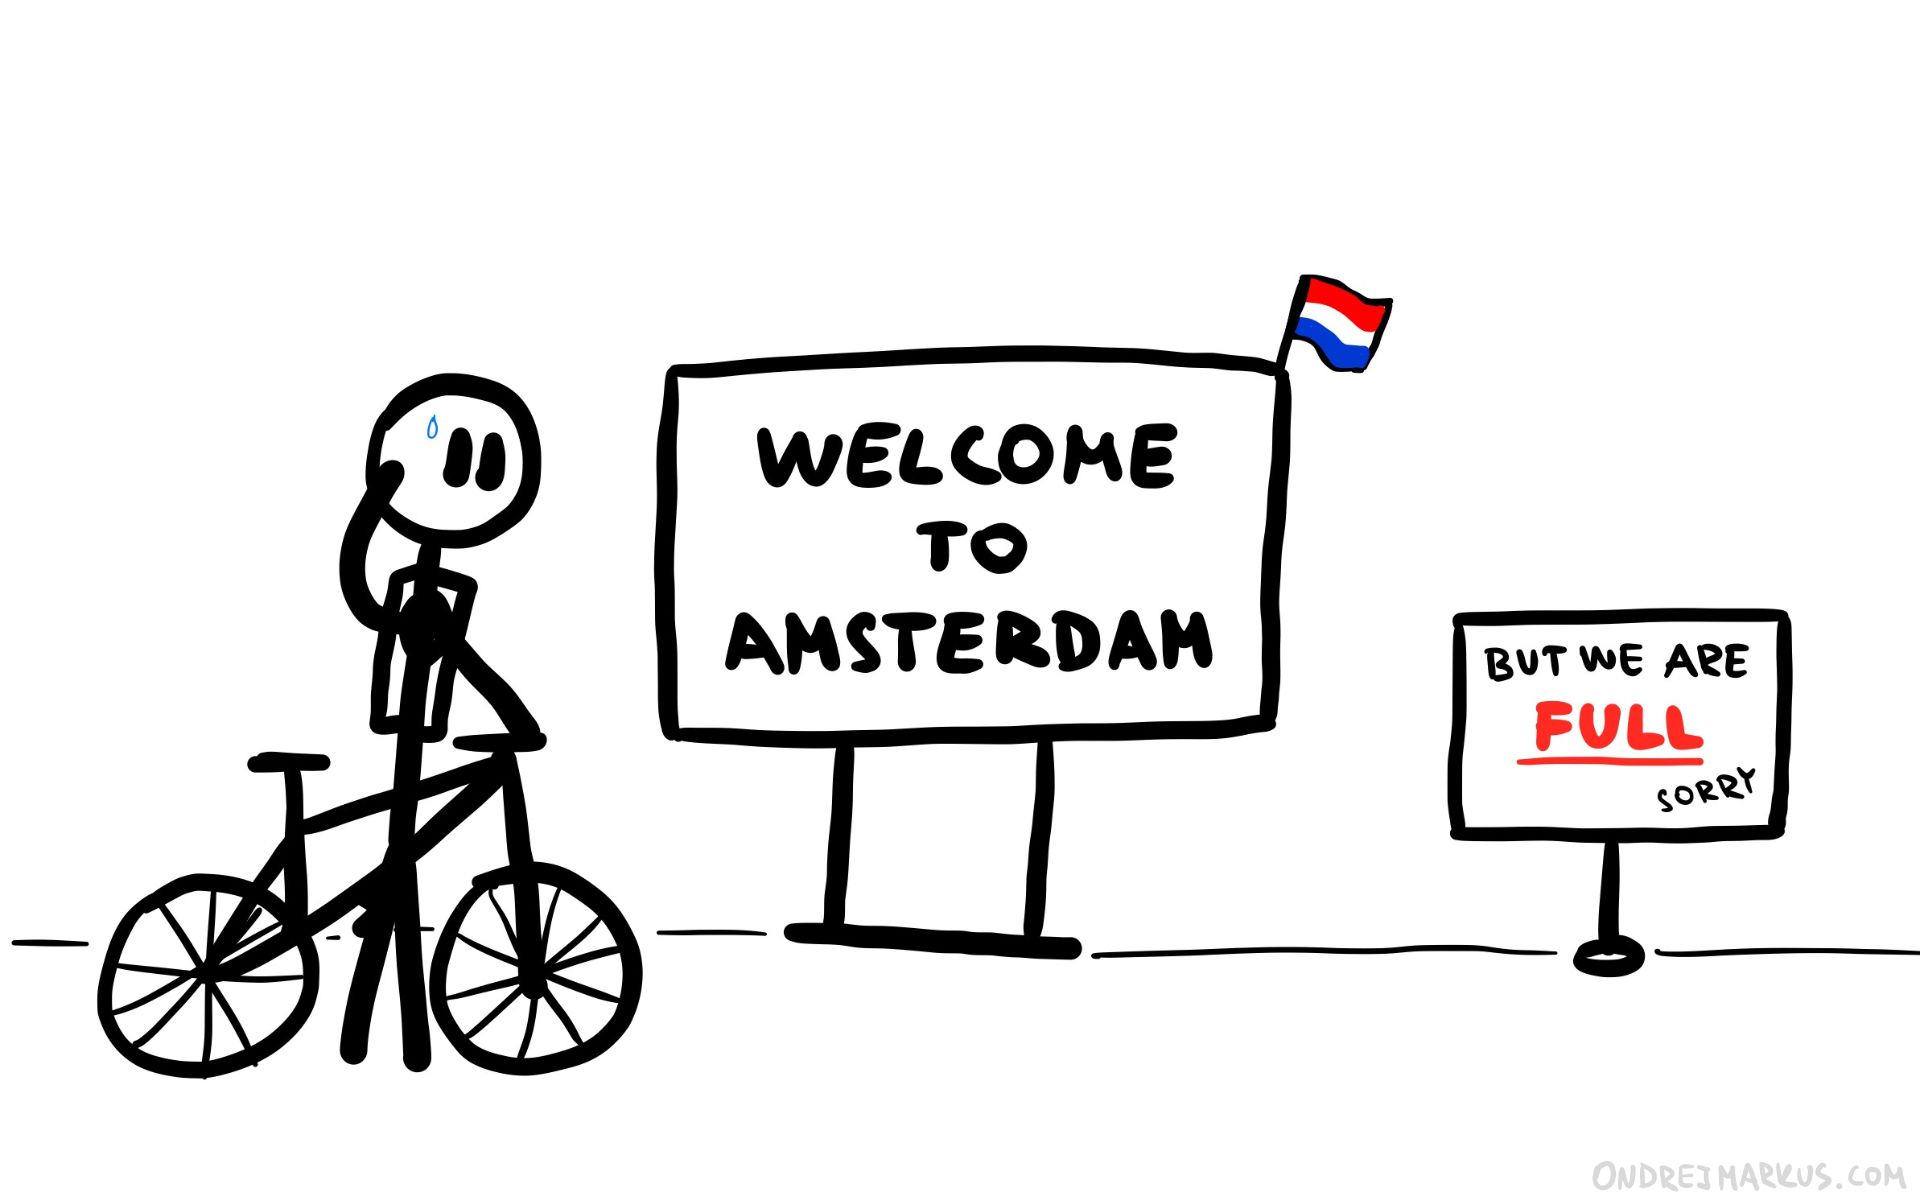 No empty apartments in Amsterdam